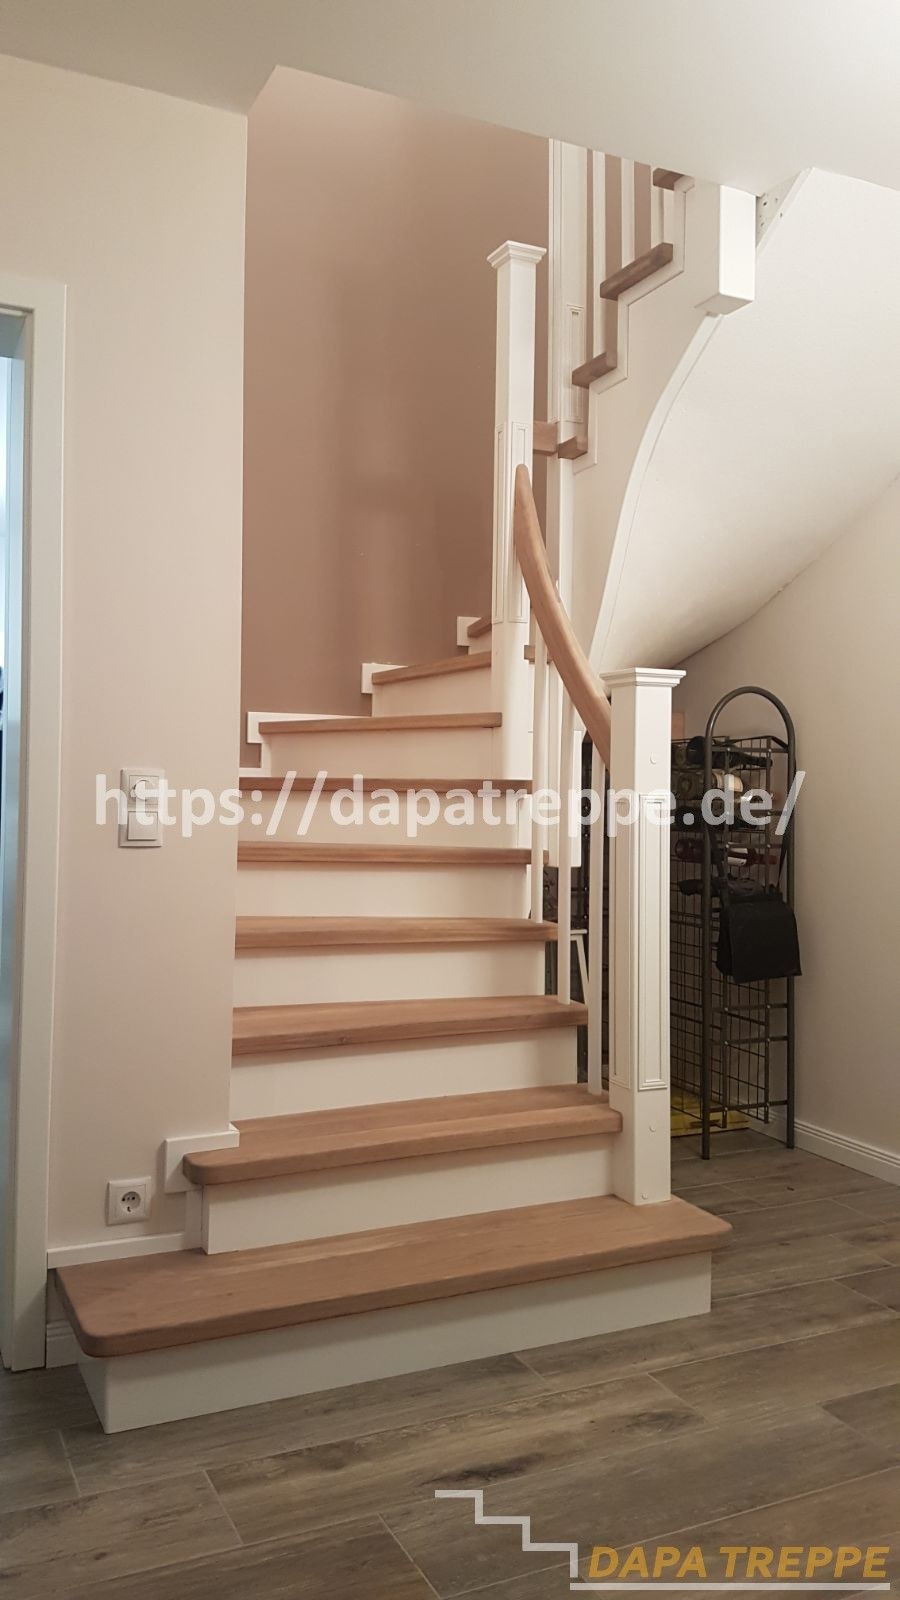 Holztreppe, Holztreppen aus Polen, Treppe, Treppen aus Holz, beste Qualität